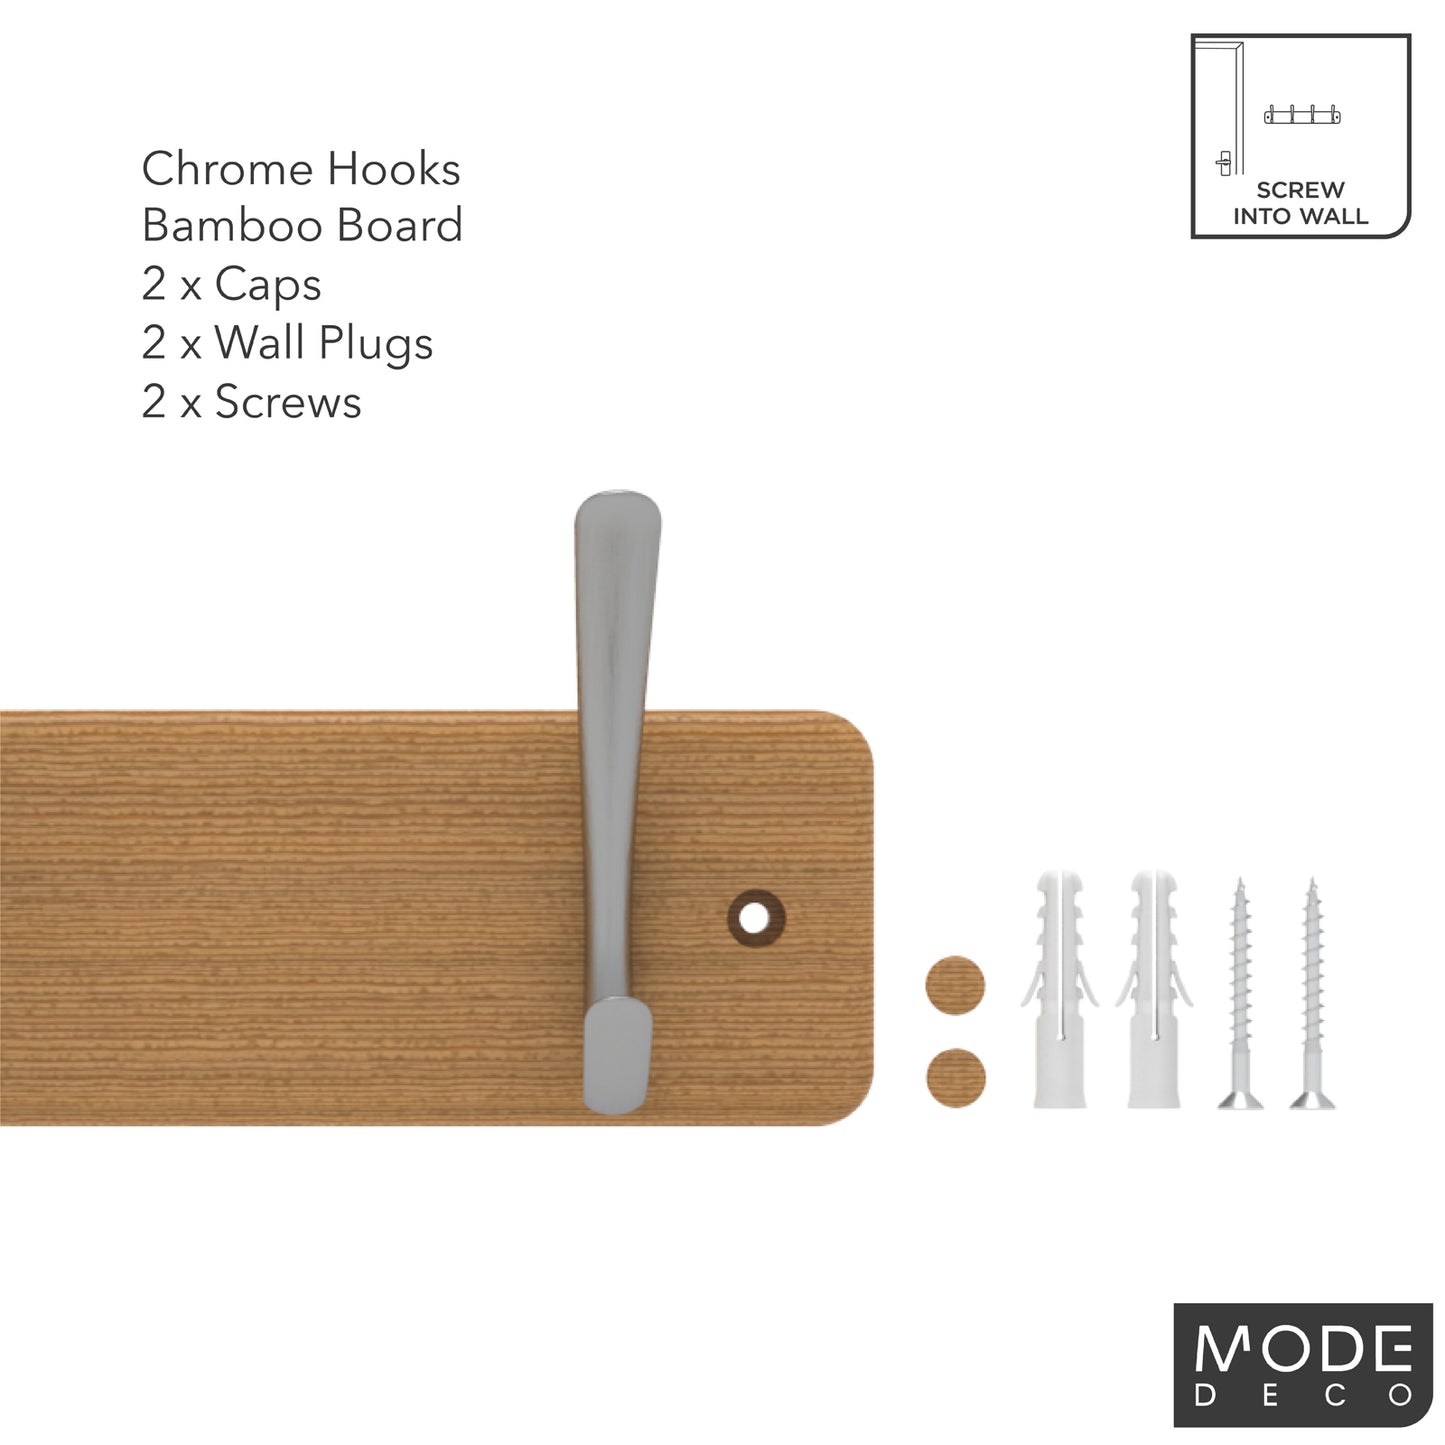 4 Chrome Hooks on Bamboo Board Hat & Coat Rack